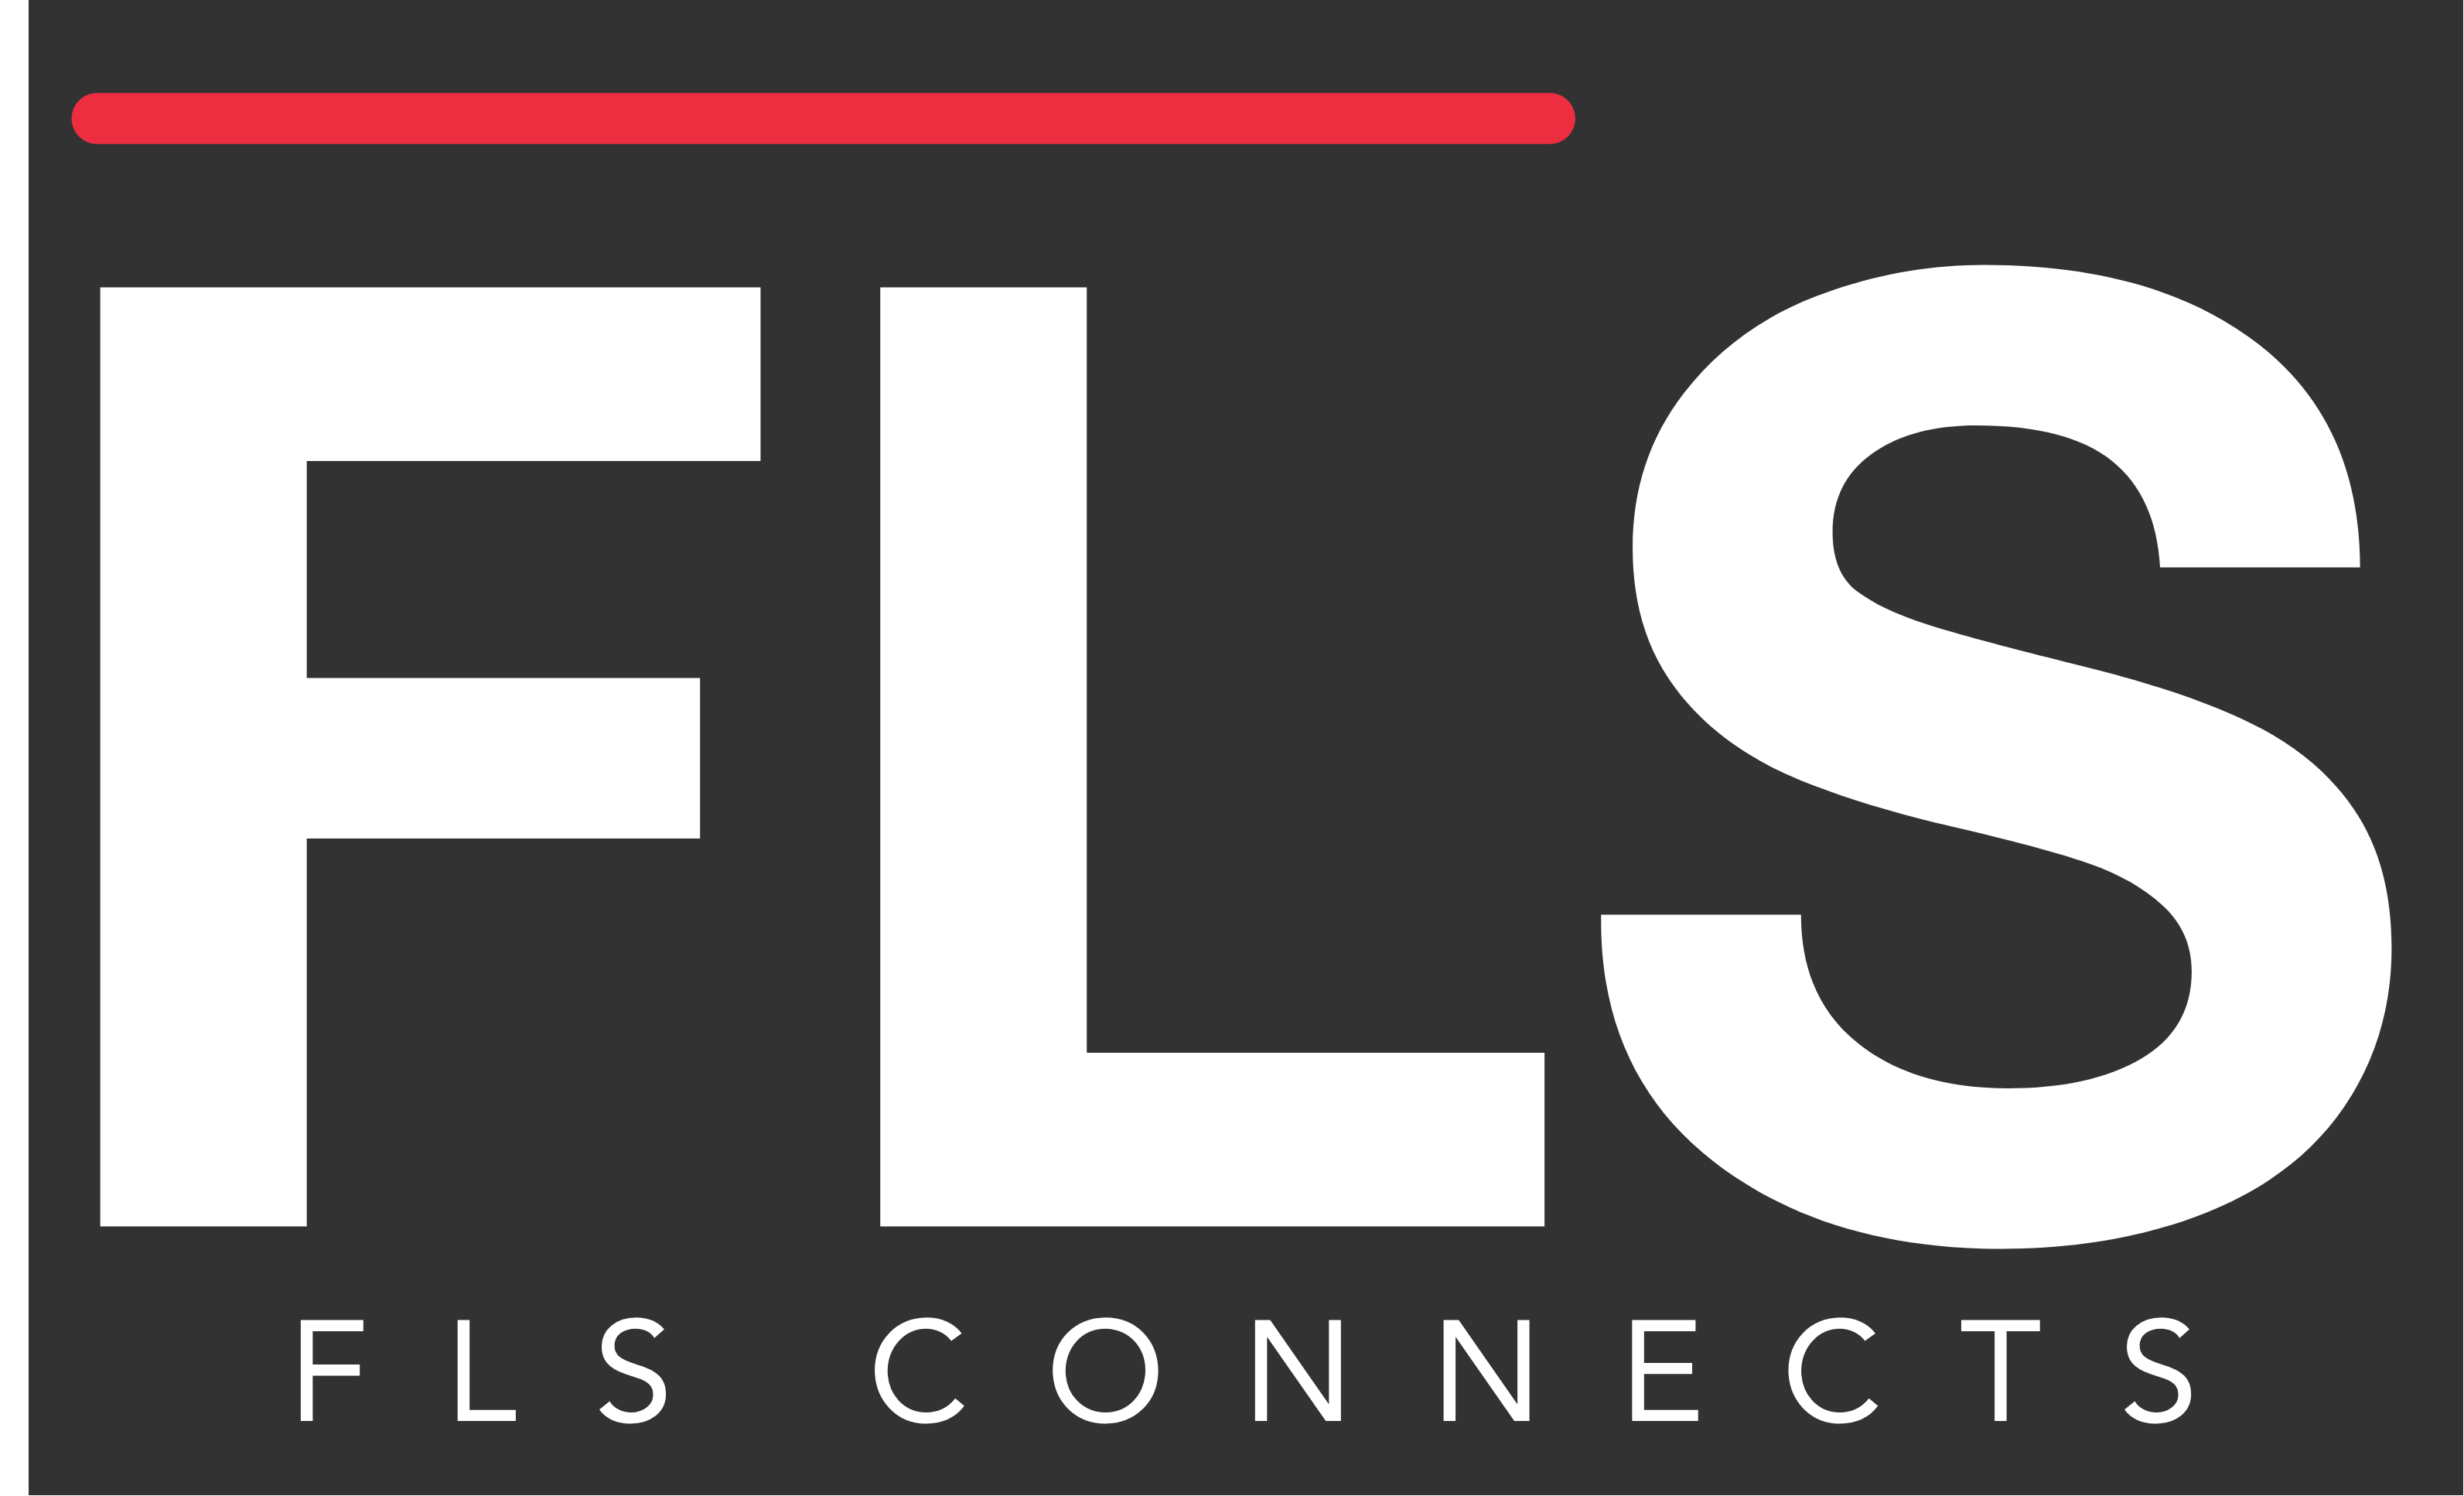 FLS Connects